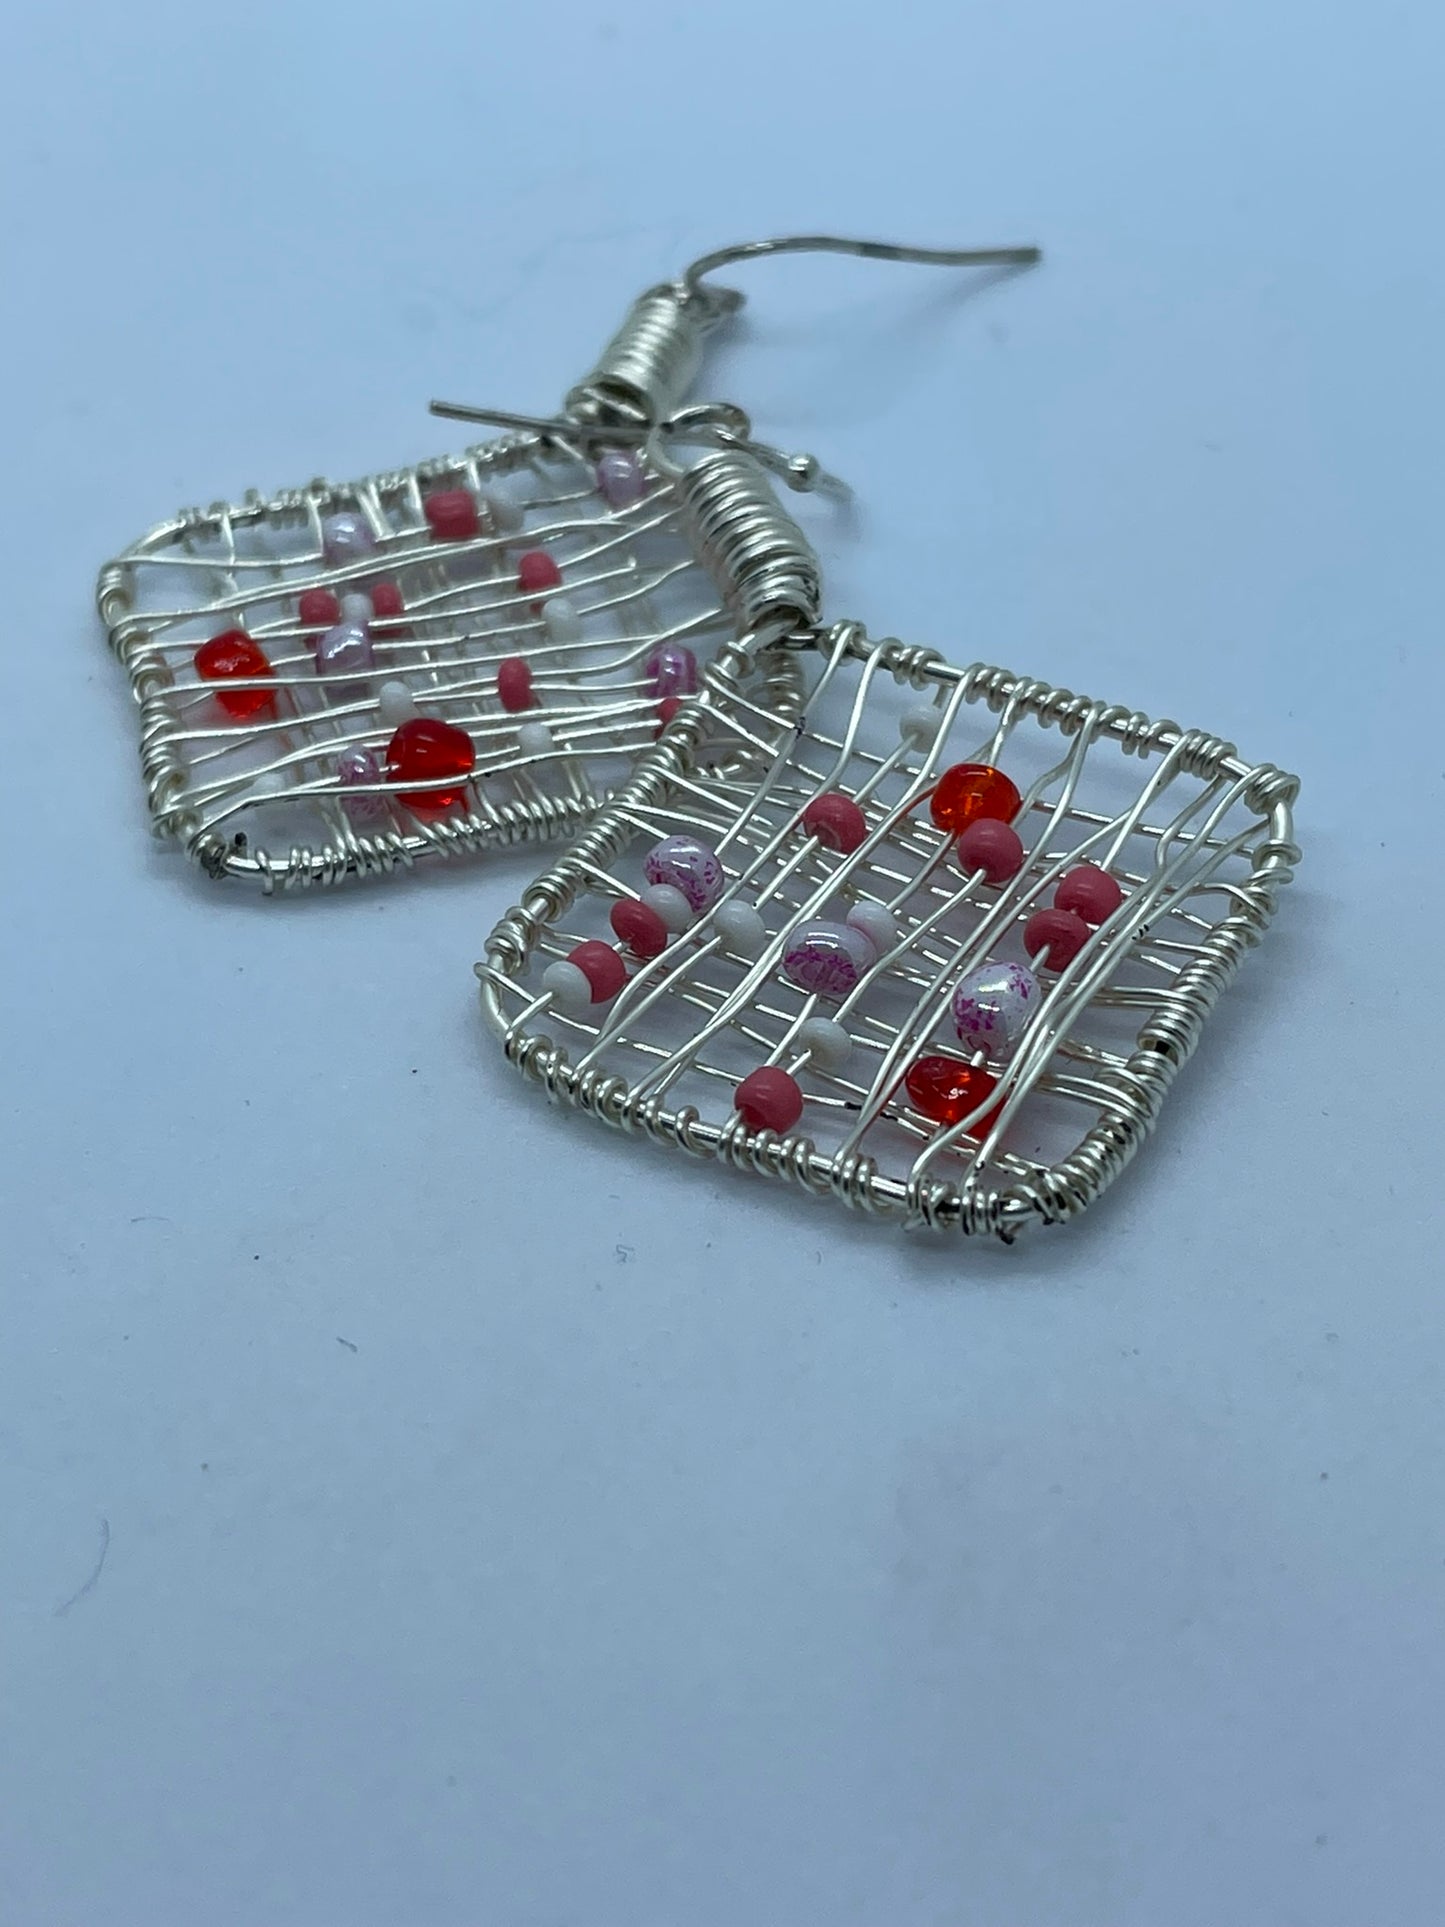 Wire & pink seed beads earrings in a rhombus